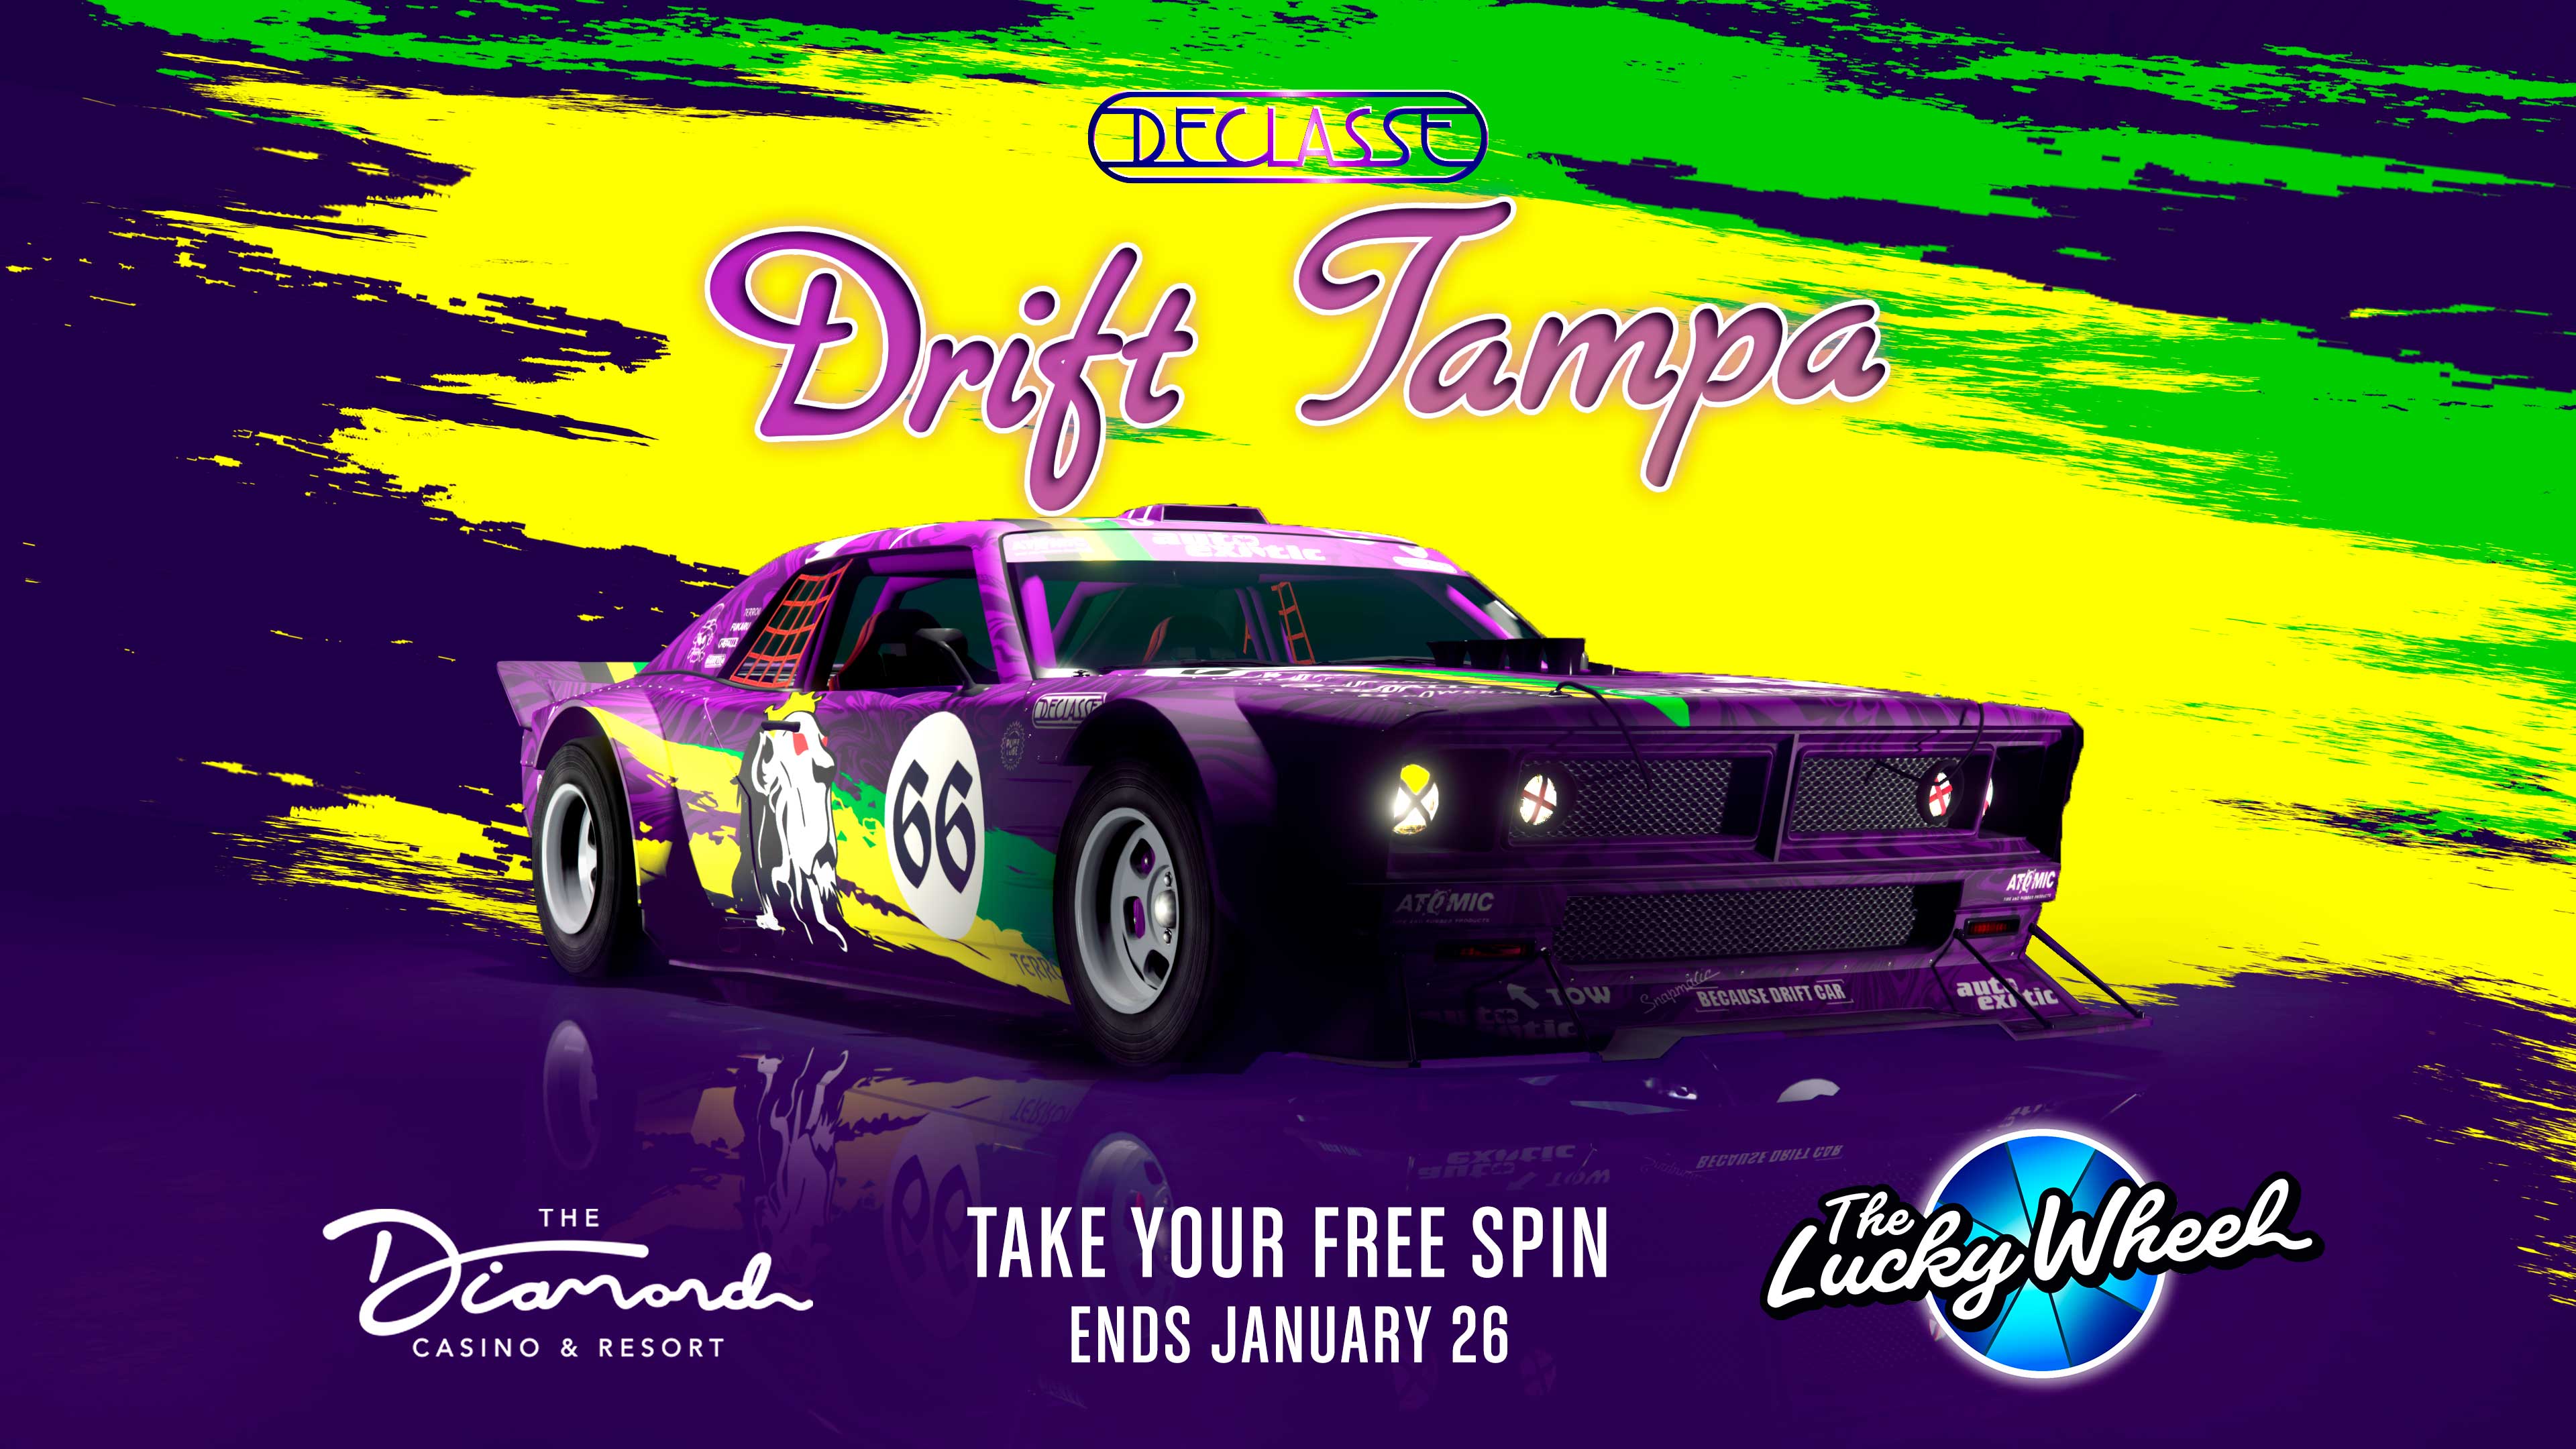 GTA Online Podium Lucky Wheel kocsi: Declasse Drift Tampa